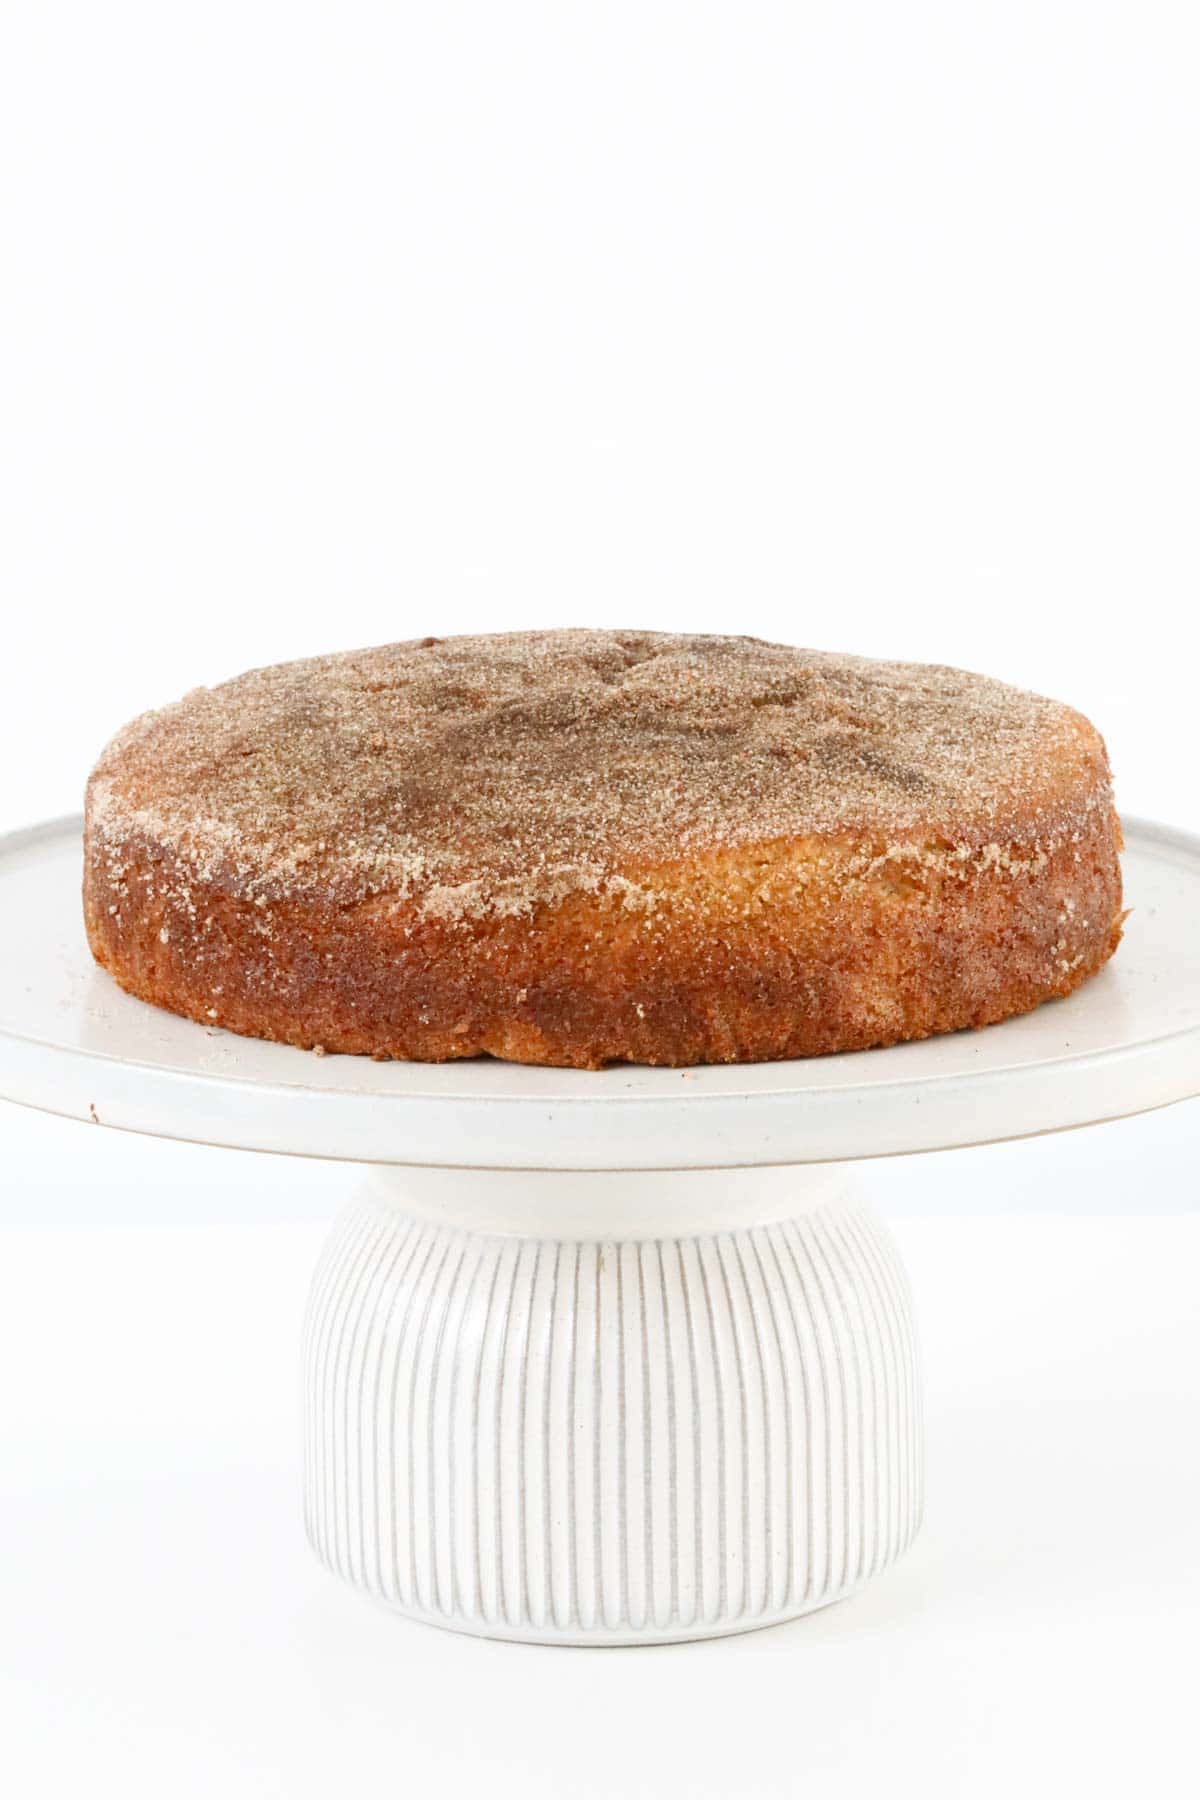 A baked cinnamon tea cake on a white cake platter.